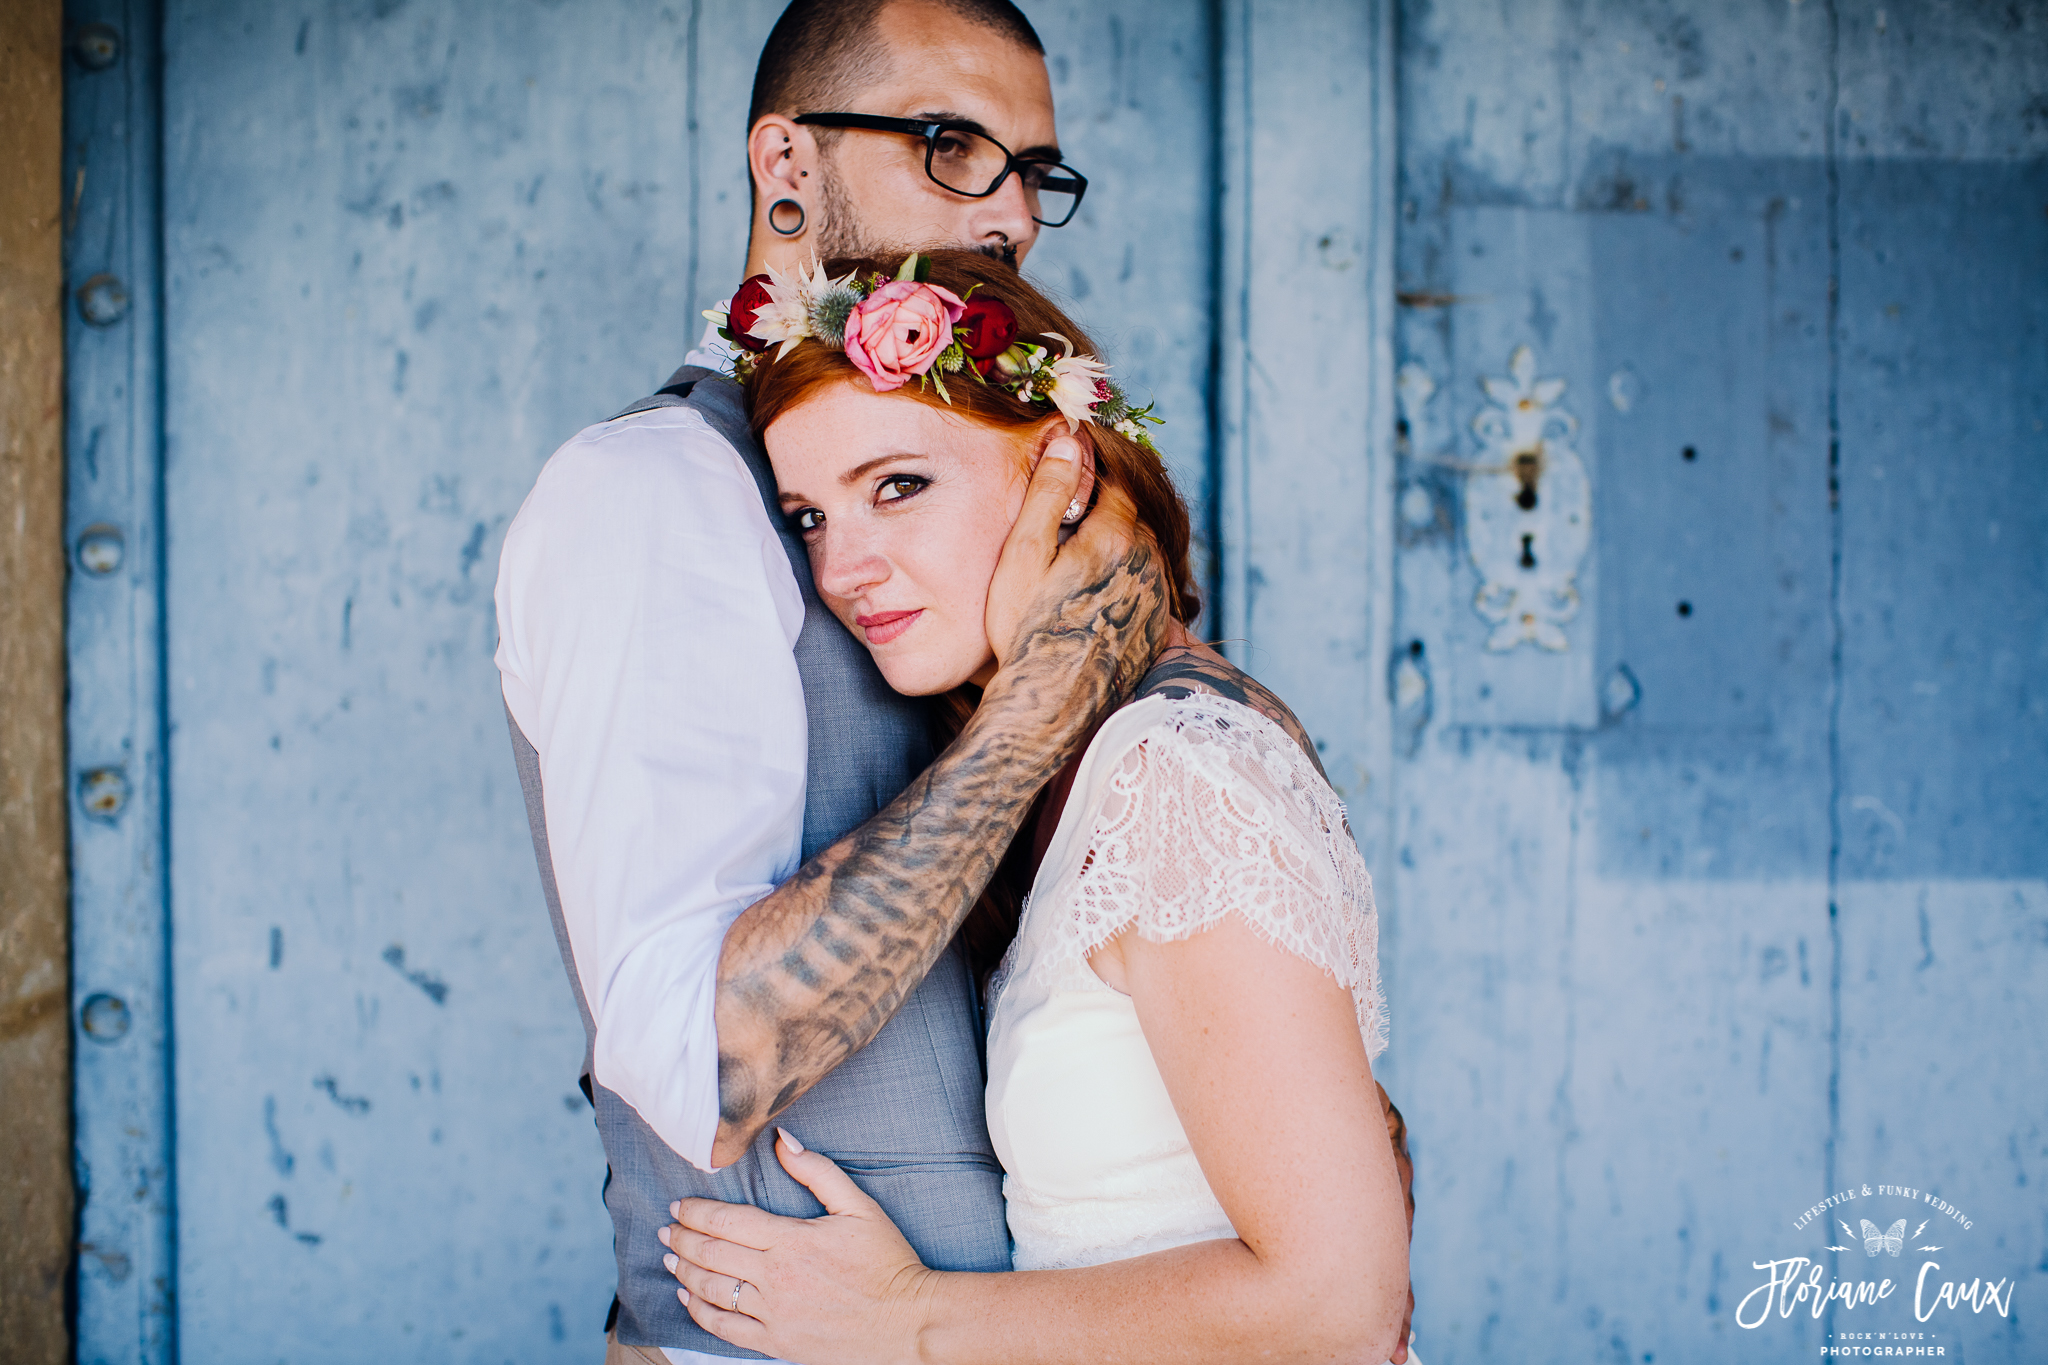 photographe-mariage-toulouse-rocknroll-maries-tatoues-floriane-caux-52